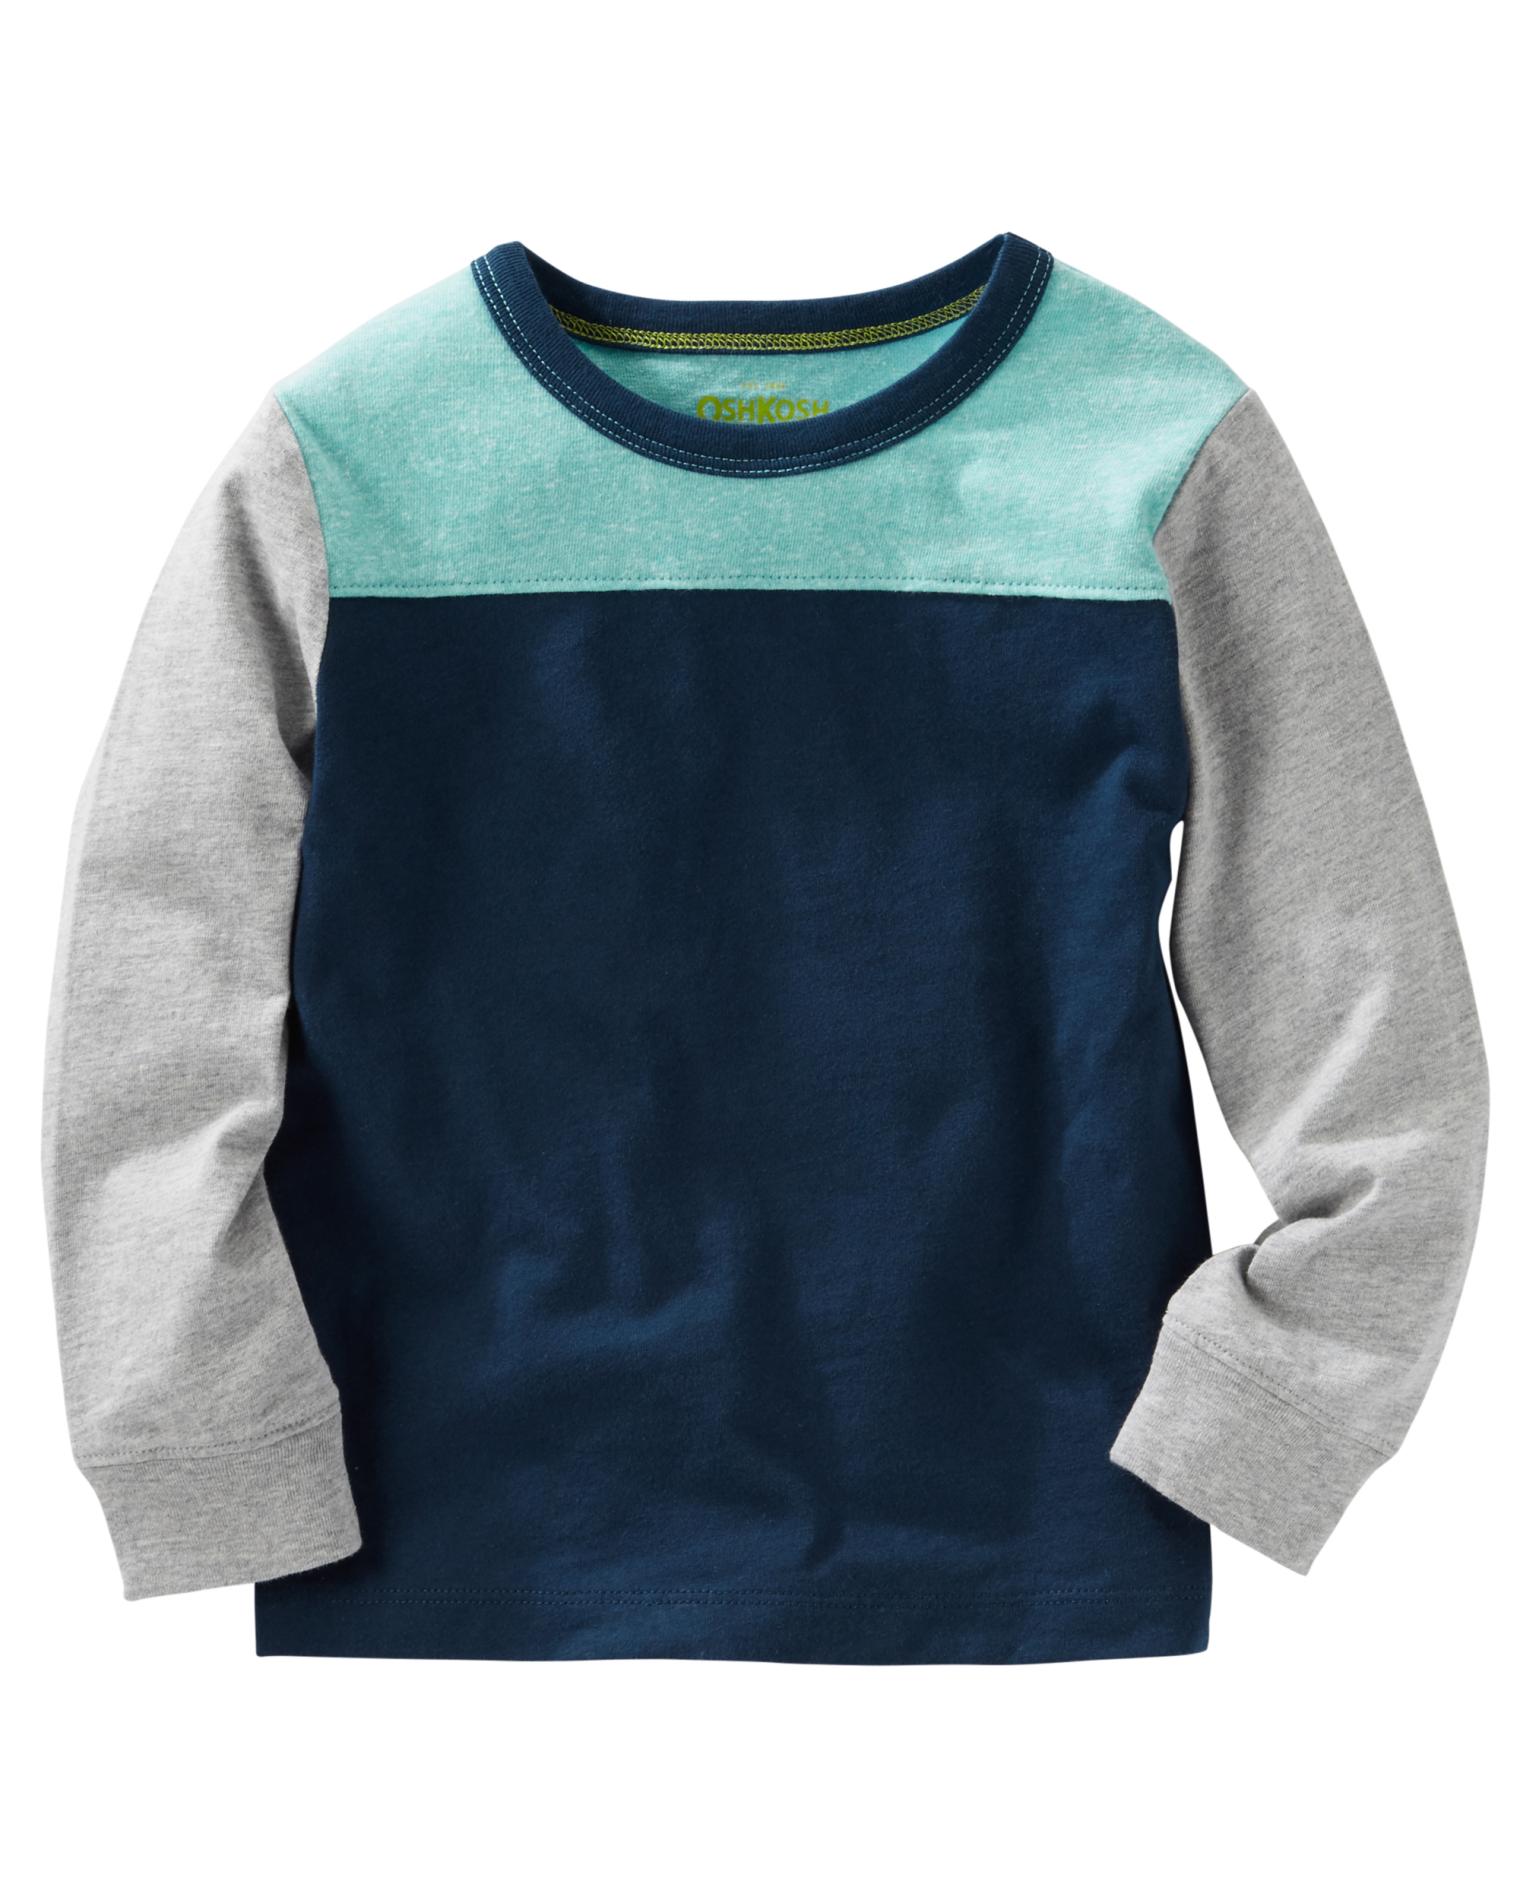 OshKosh Toddler Boys' Long-Sleeve T-Shirt - Colorblock